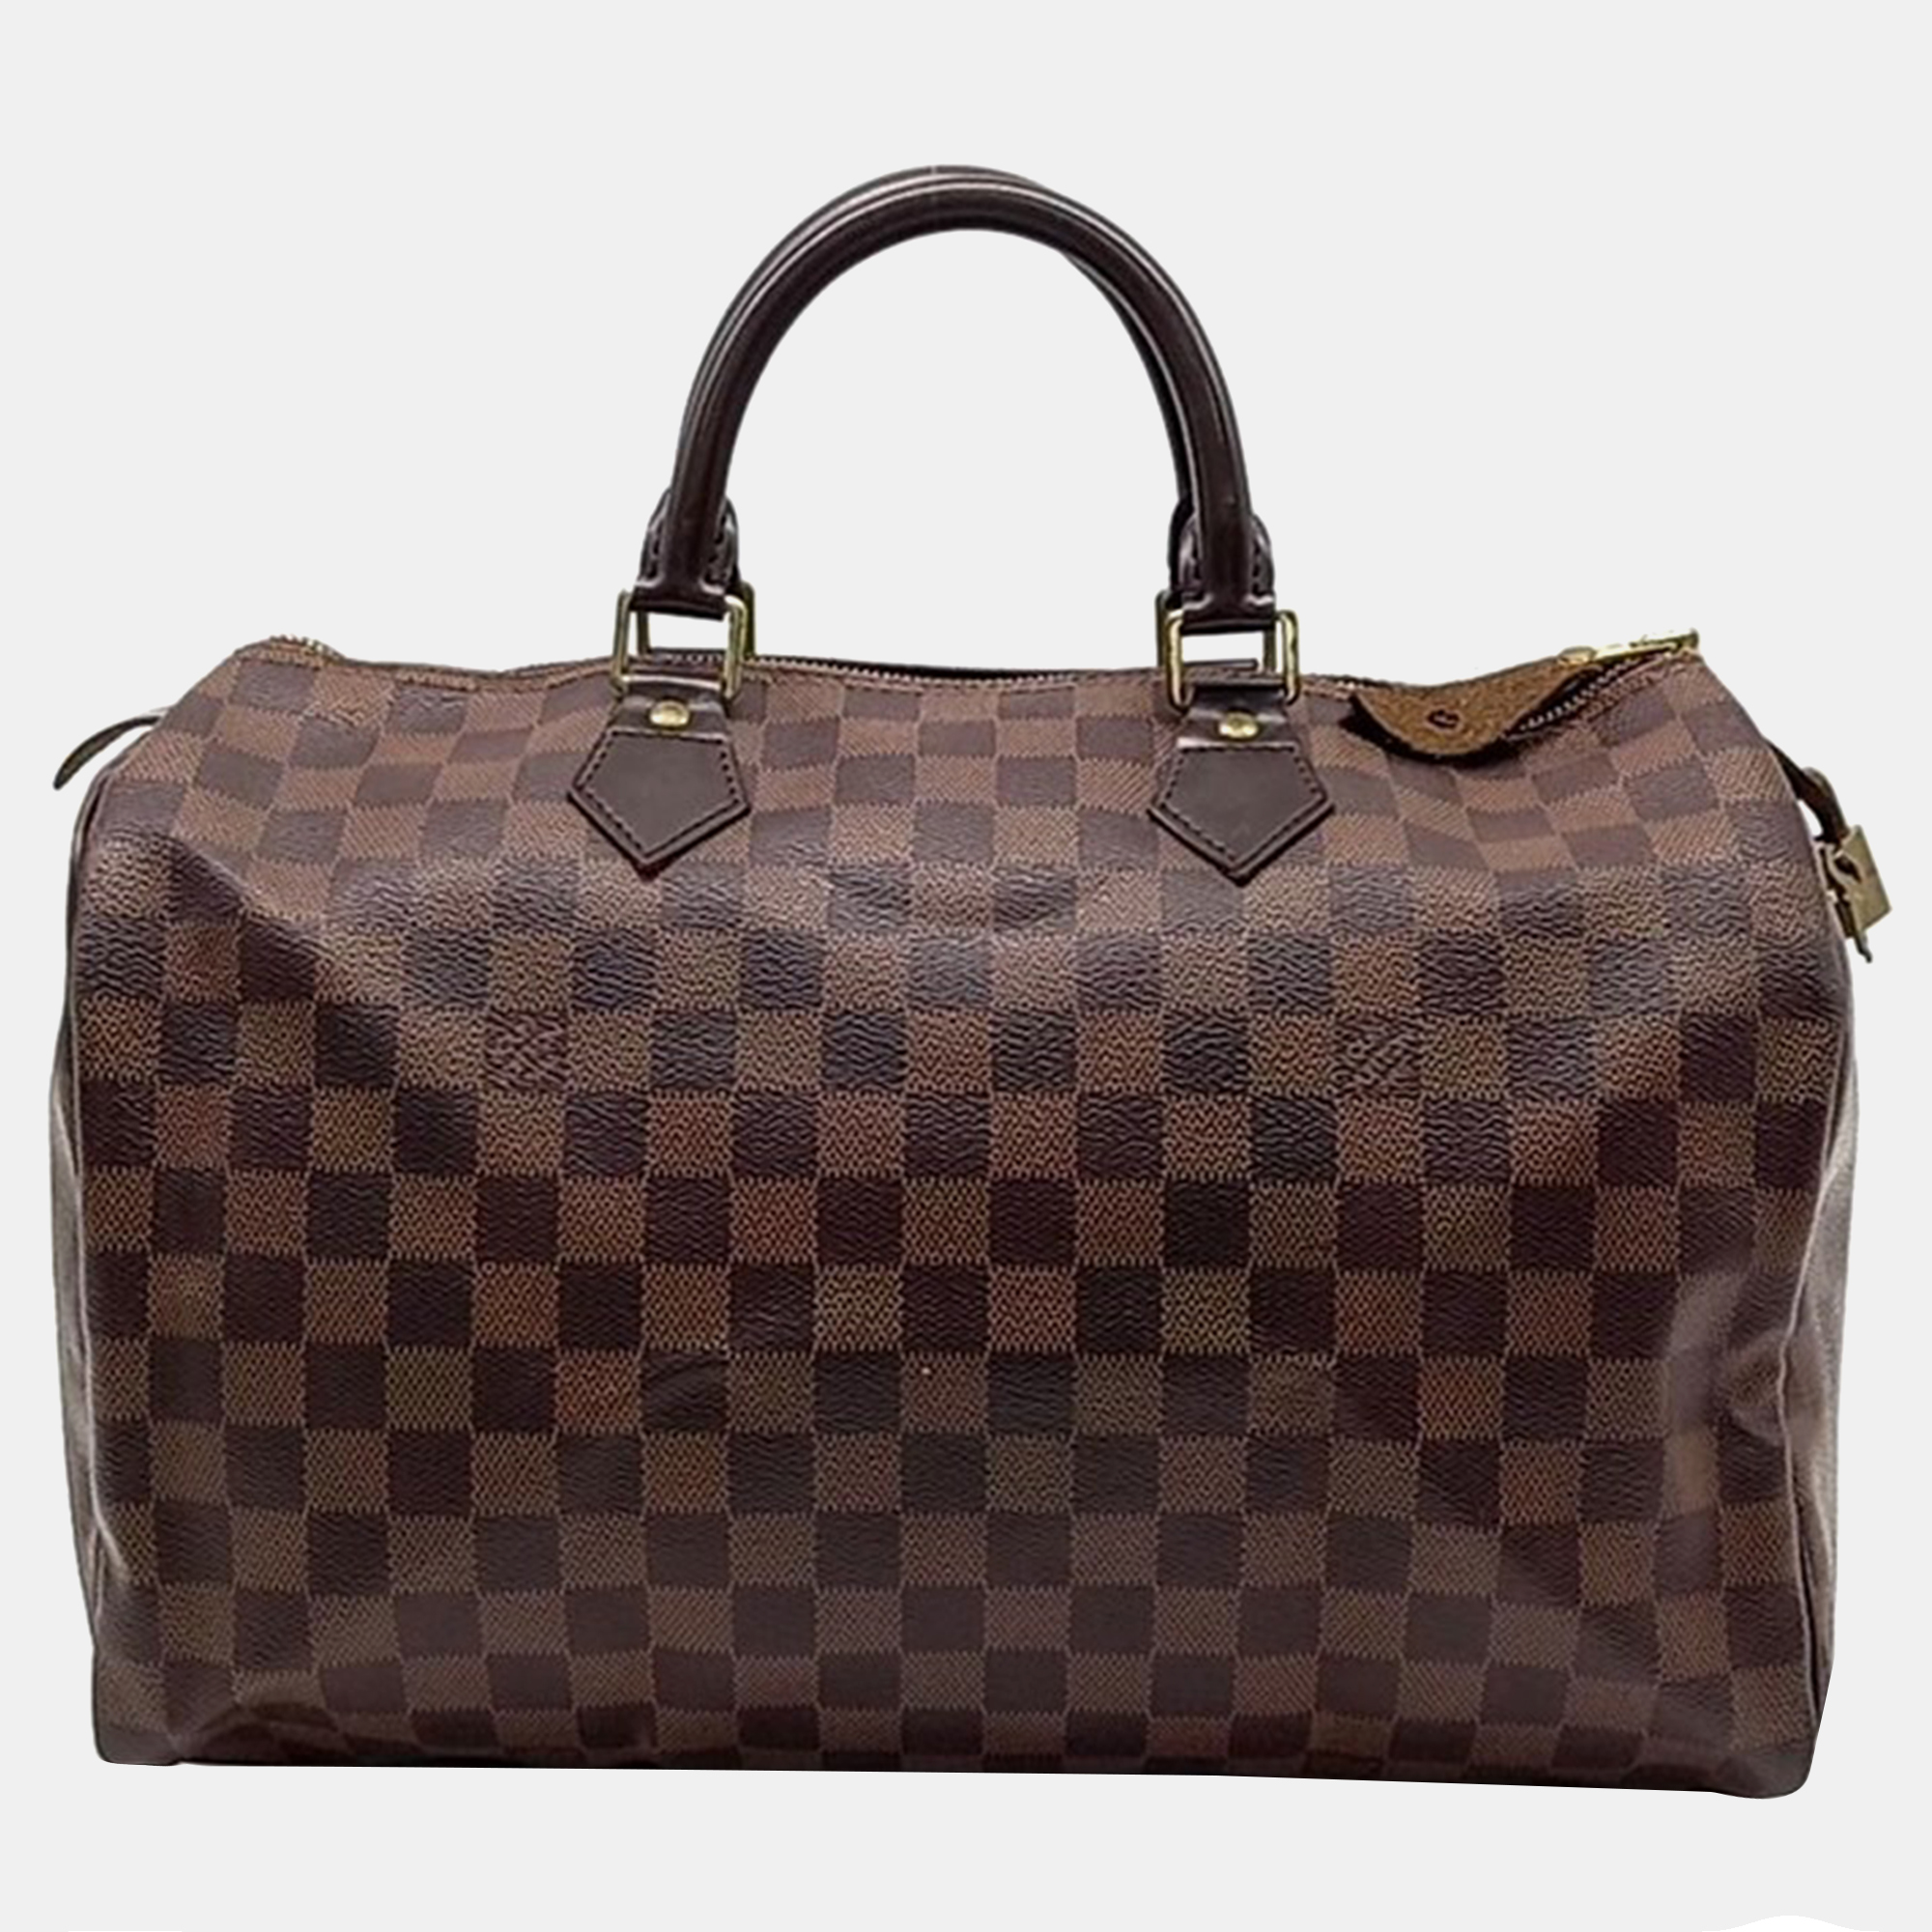 

Louis Vuitton Damier Speedy 35 Handbag, Brown